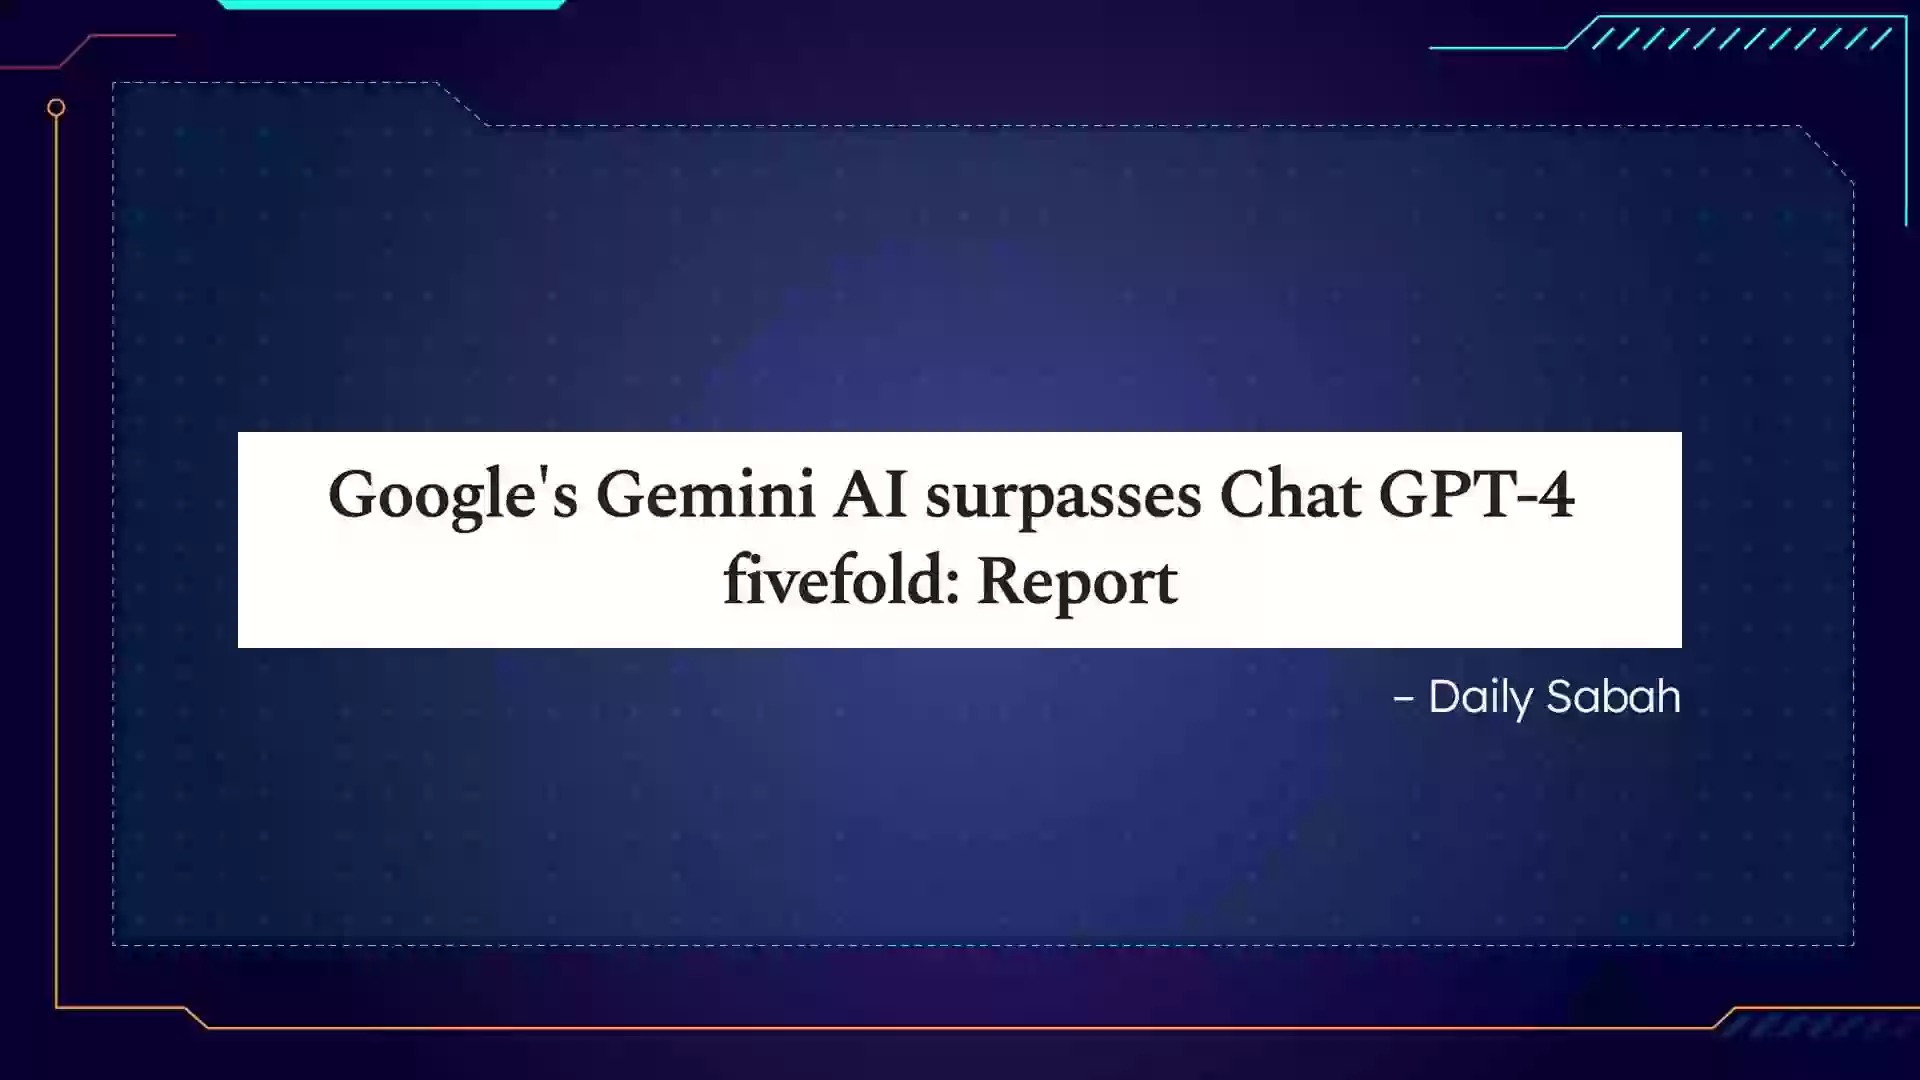 BNF-Headline-DailySabah-Googles-Gemini-Surpasses-ChatGPT4.jpg